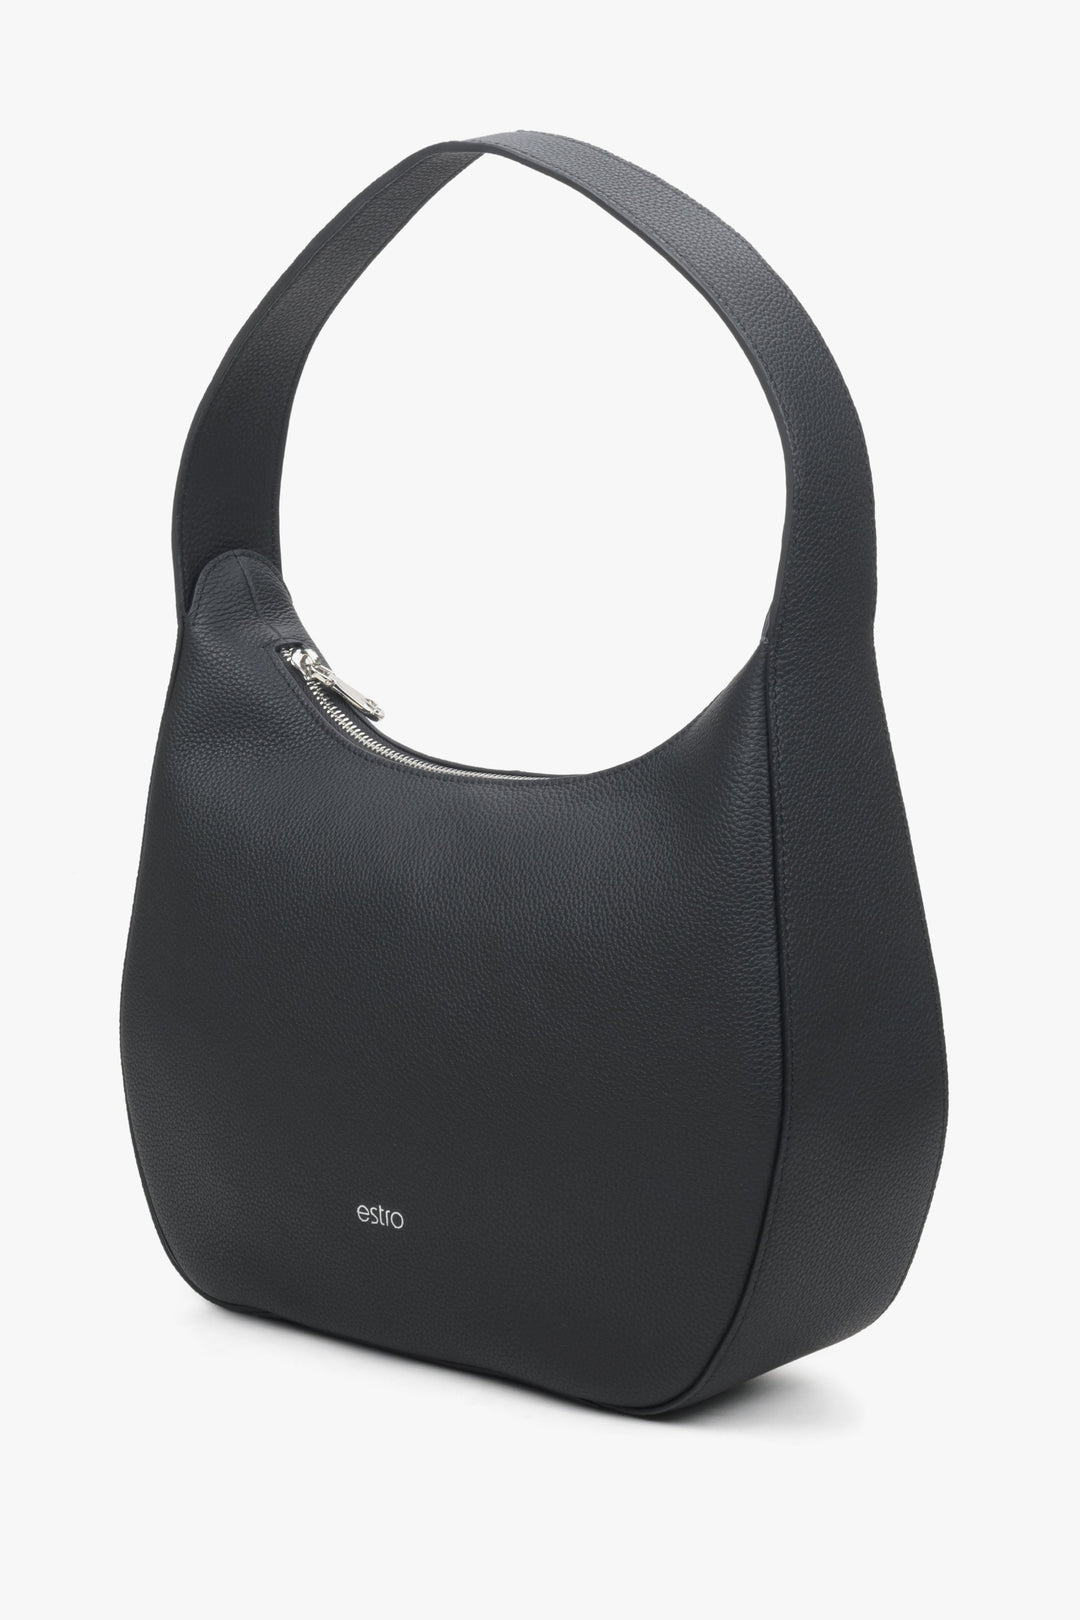 Women's crescent shaped shoulder bag made of genuine leather in black colour.